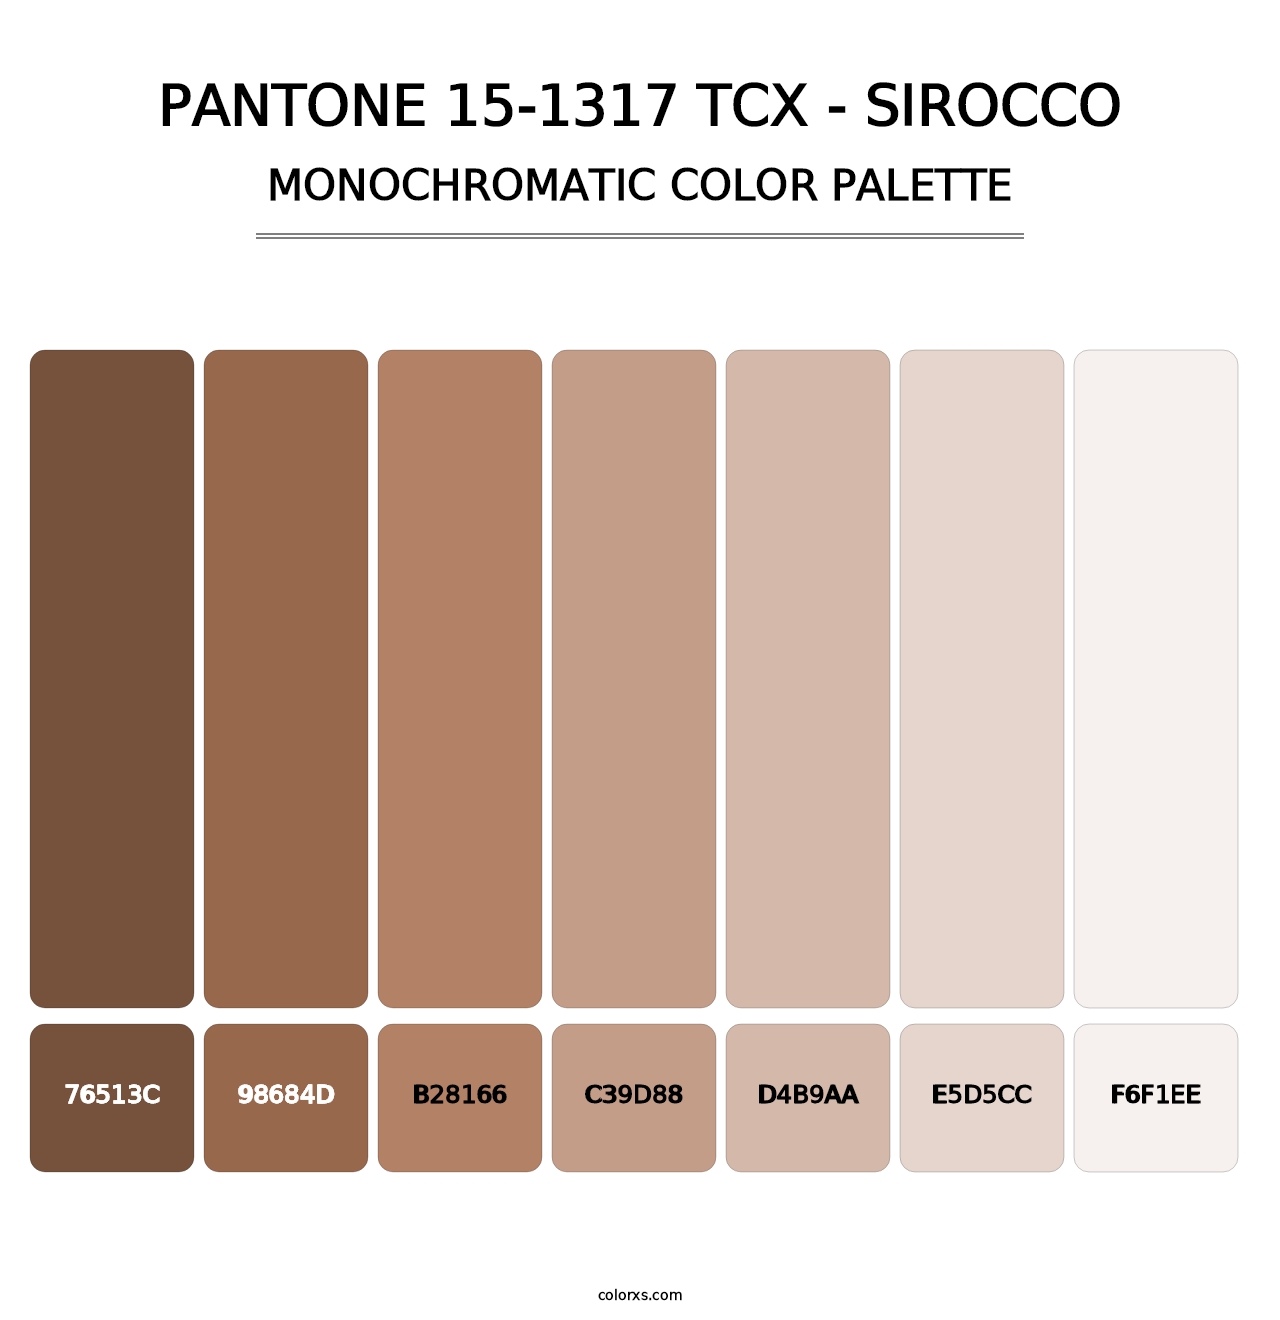 PANTONE 15-1317 TCX - Sirocco - Monochromatic Color Palette